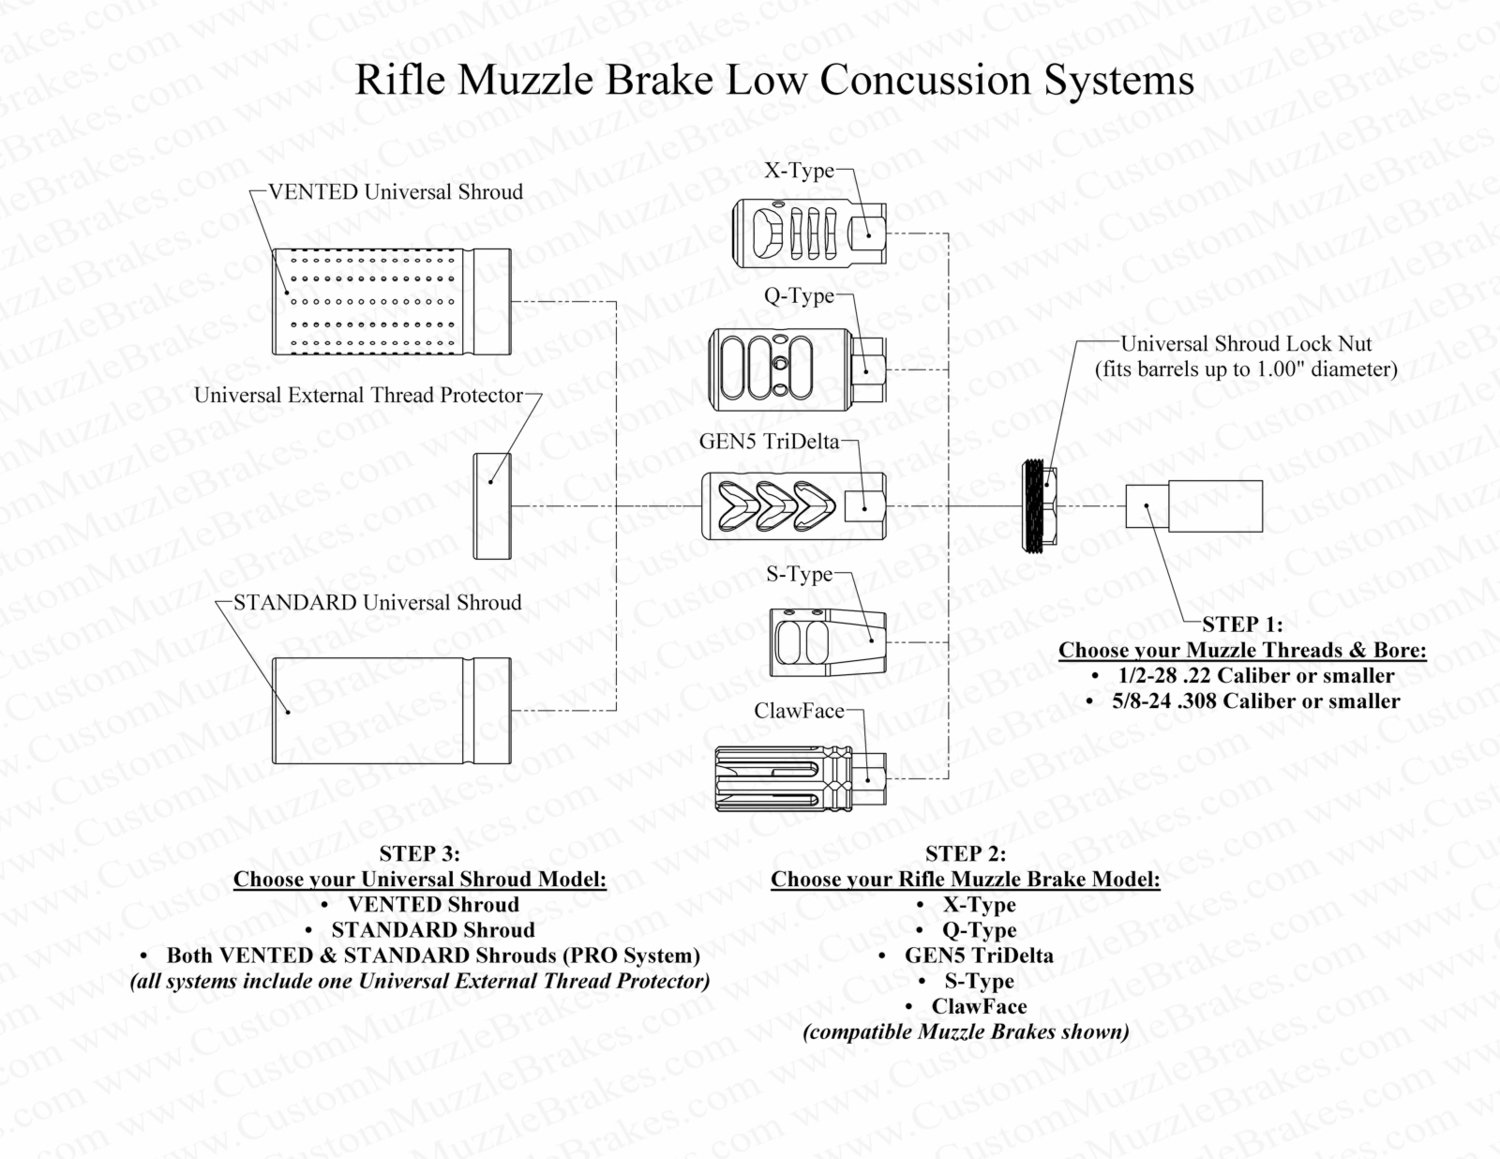 Rifle Muzzle Brake Low Concussion System